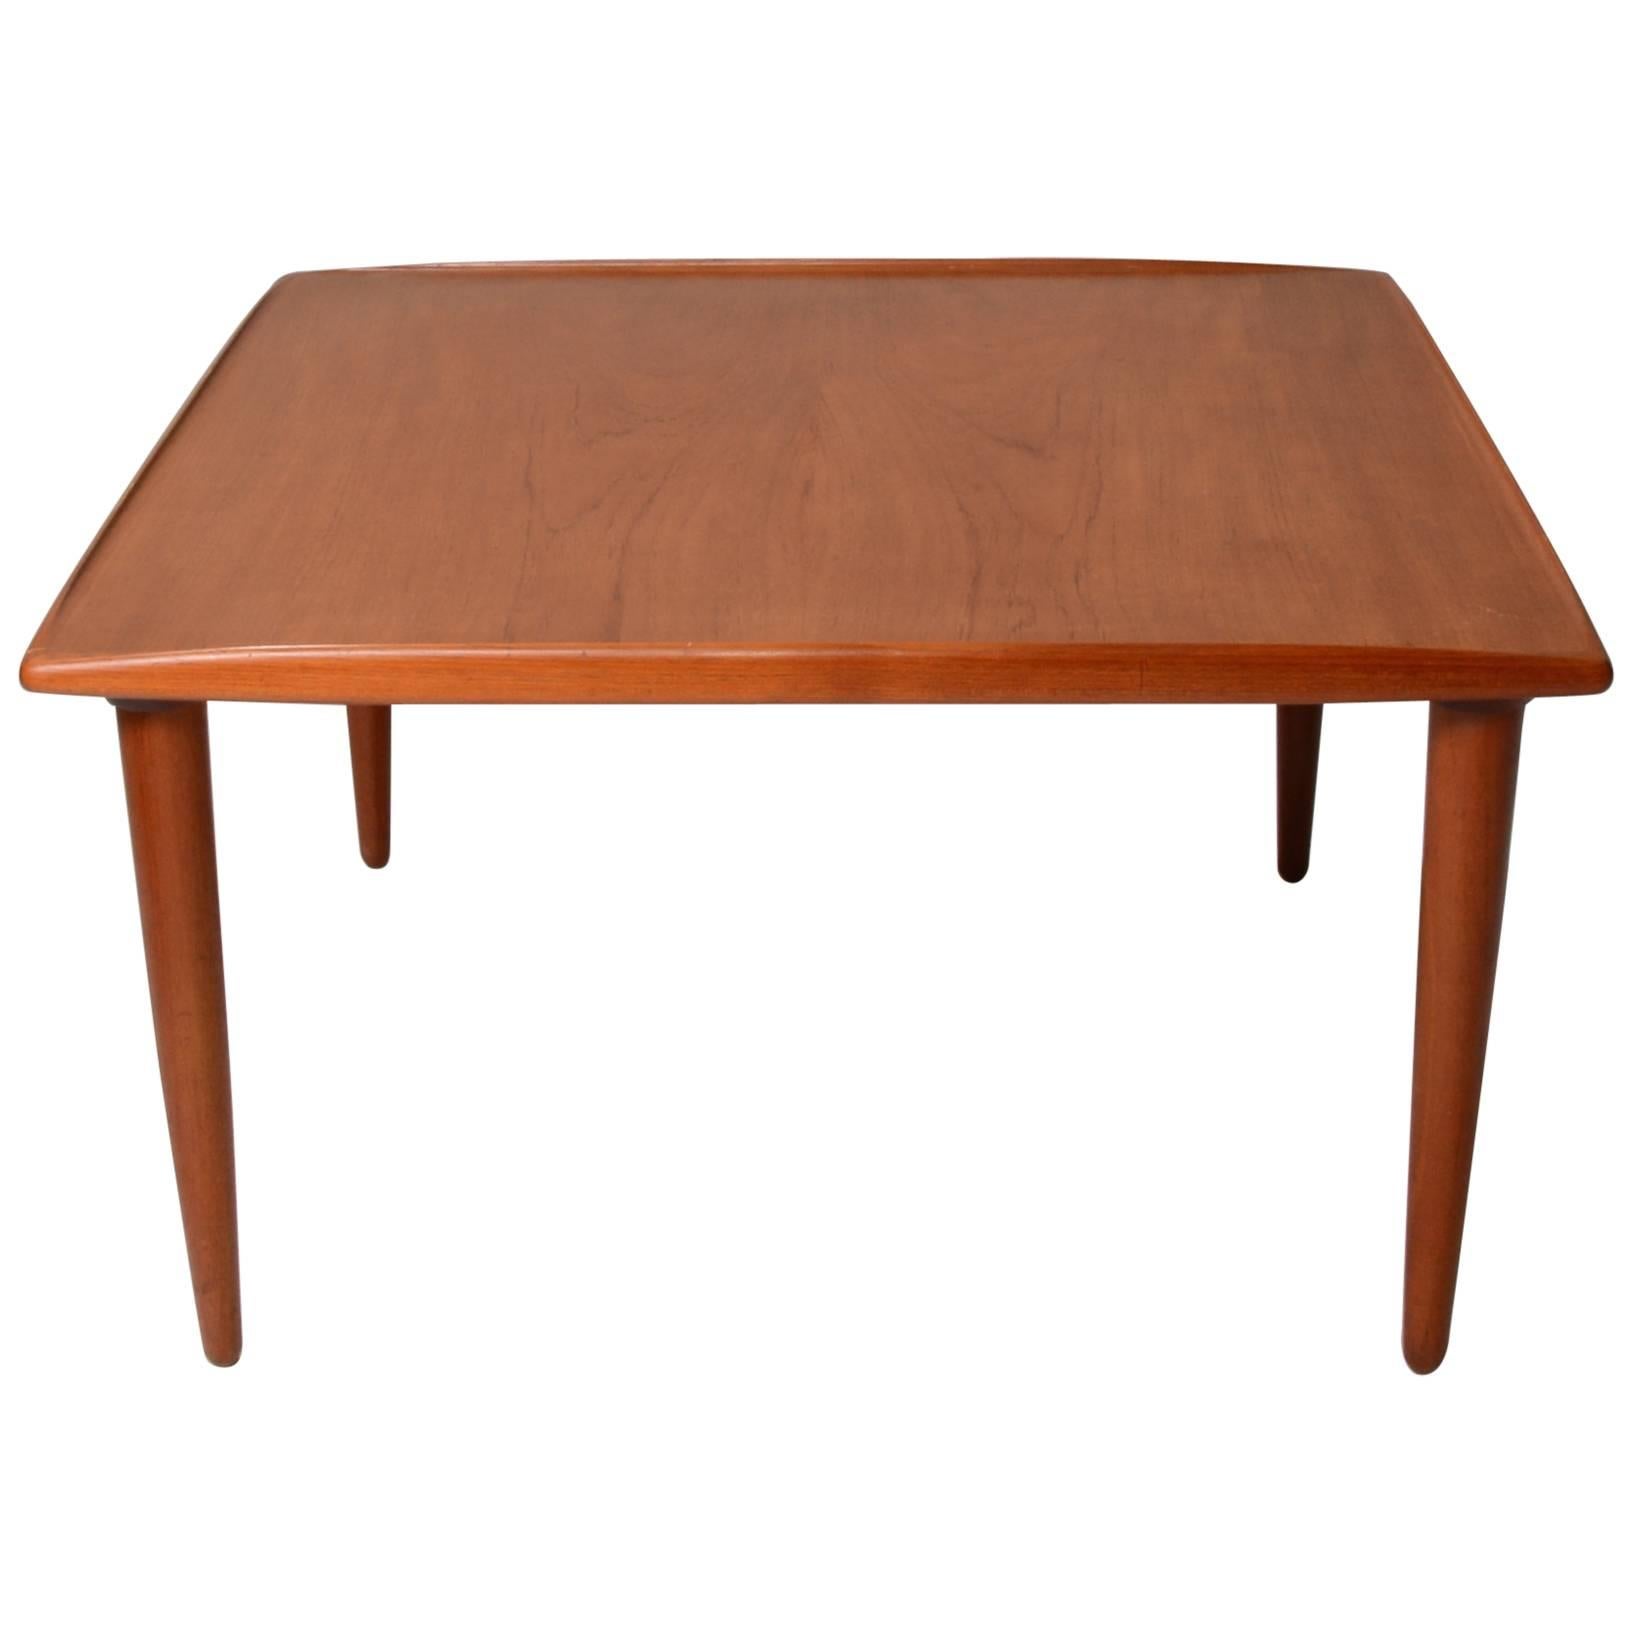 Danish Modern Square Teak Table For Sale